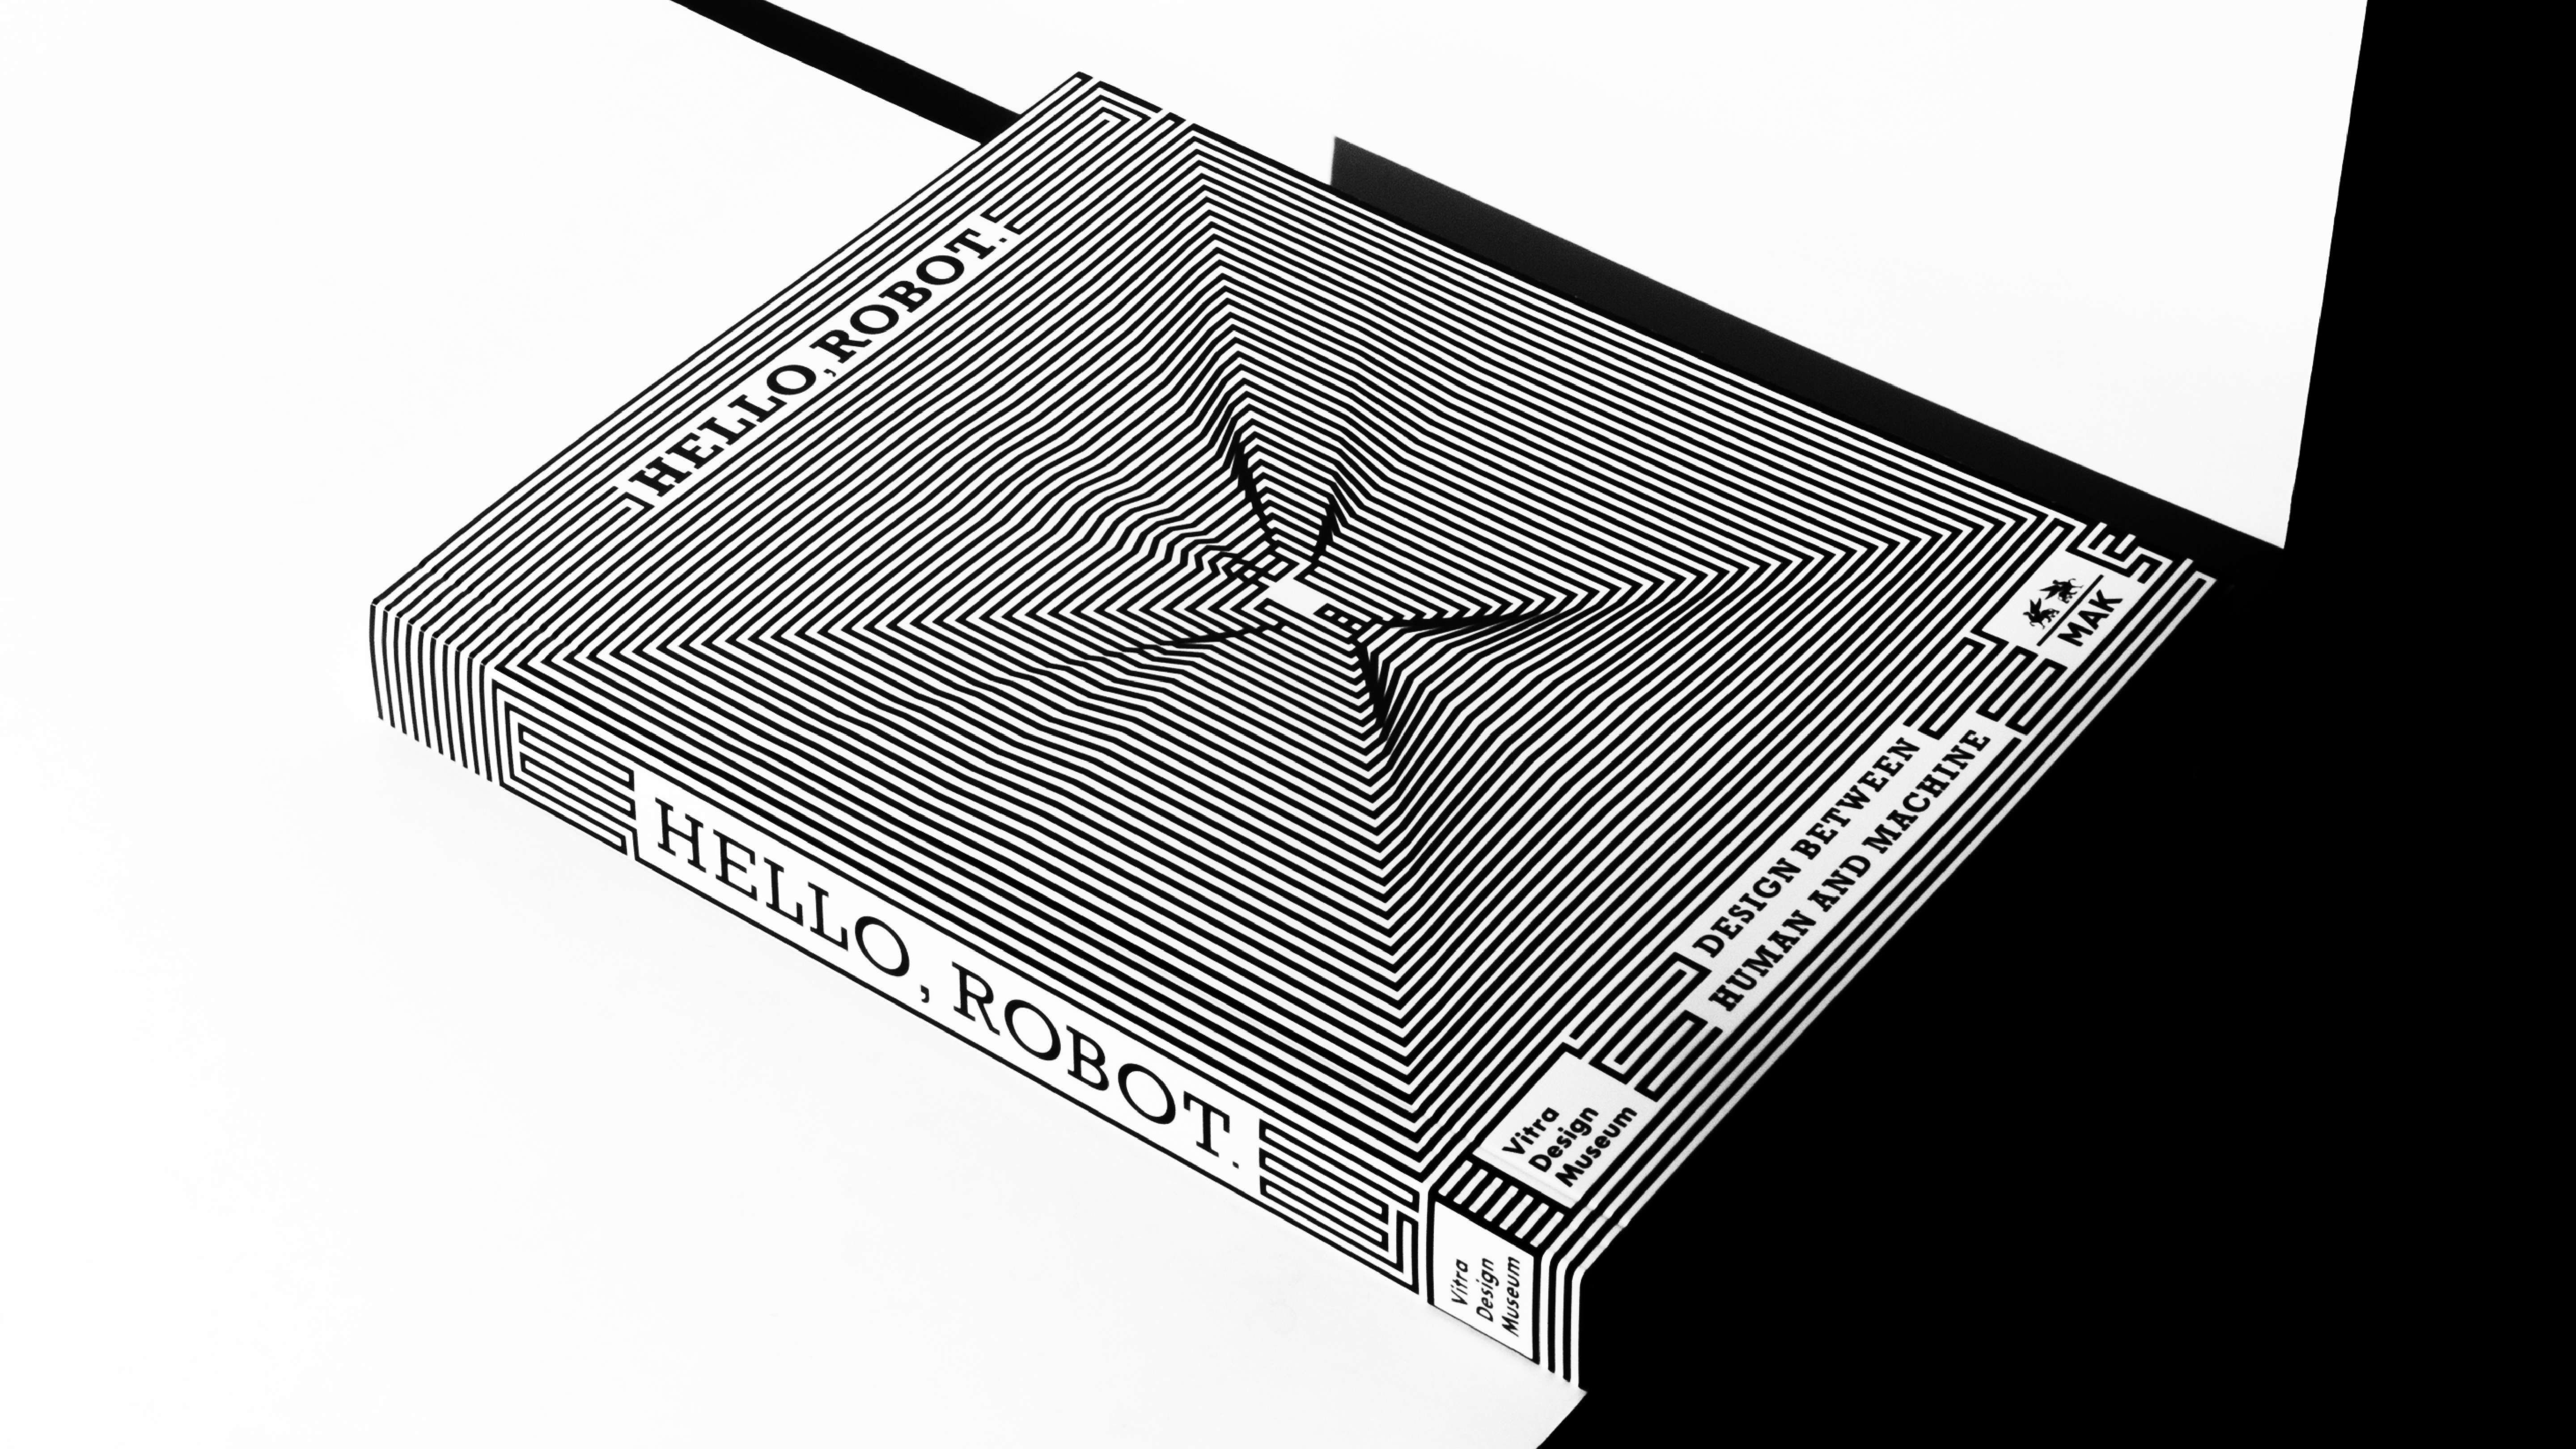 Vitra Design Museum, Hello Robot Catalogue